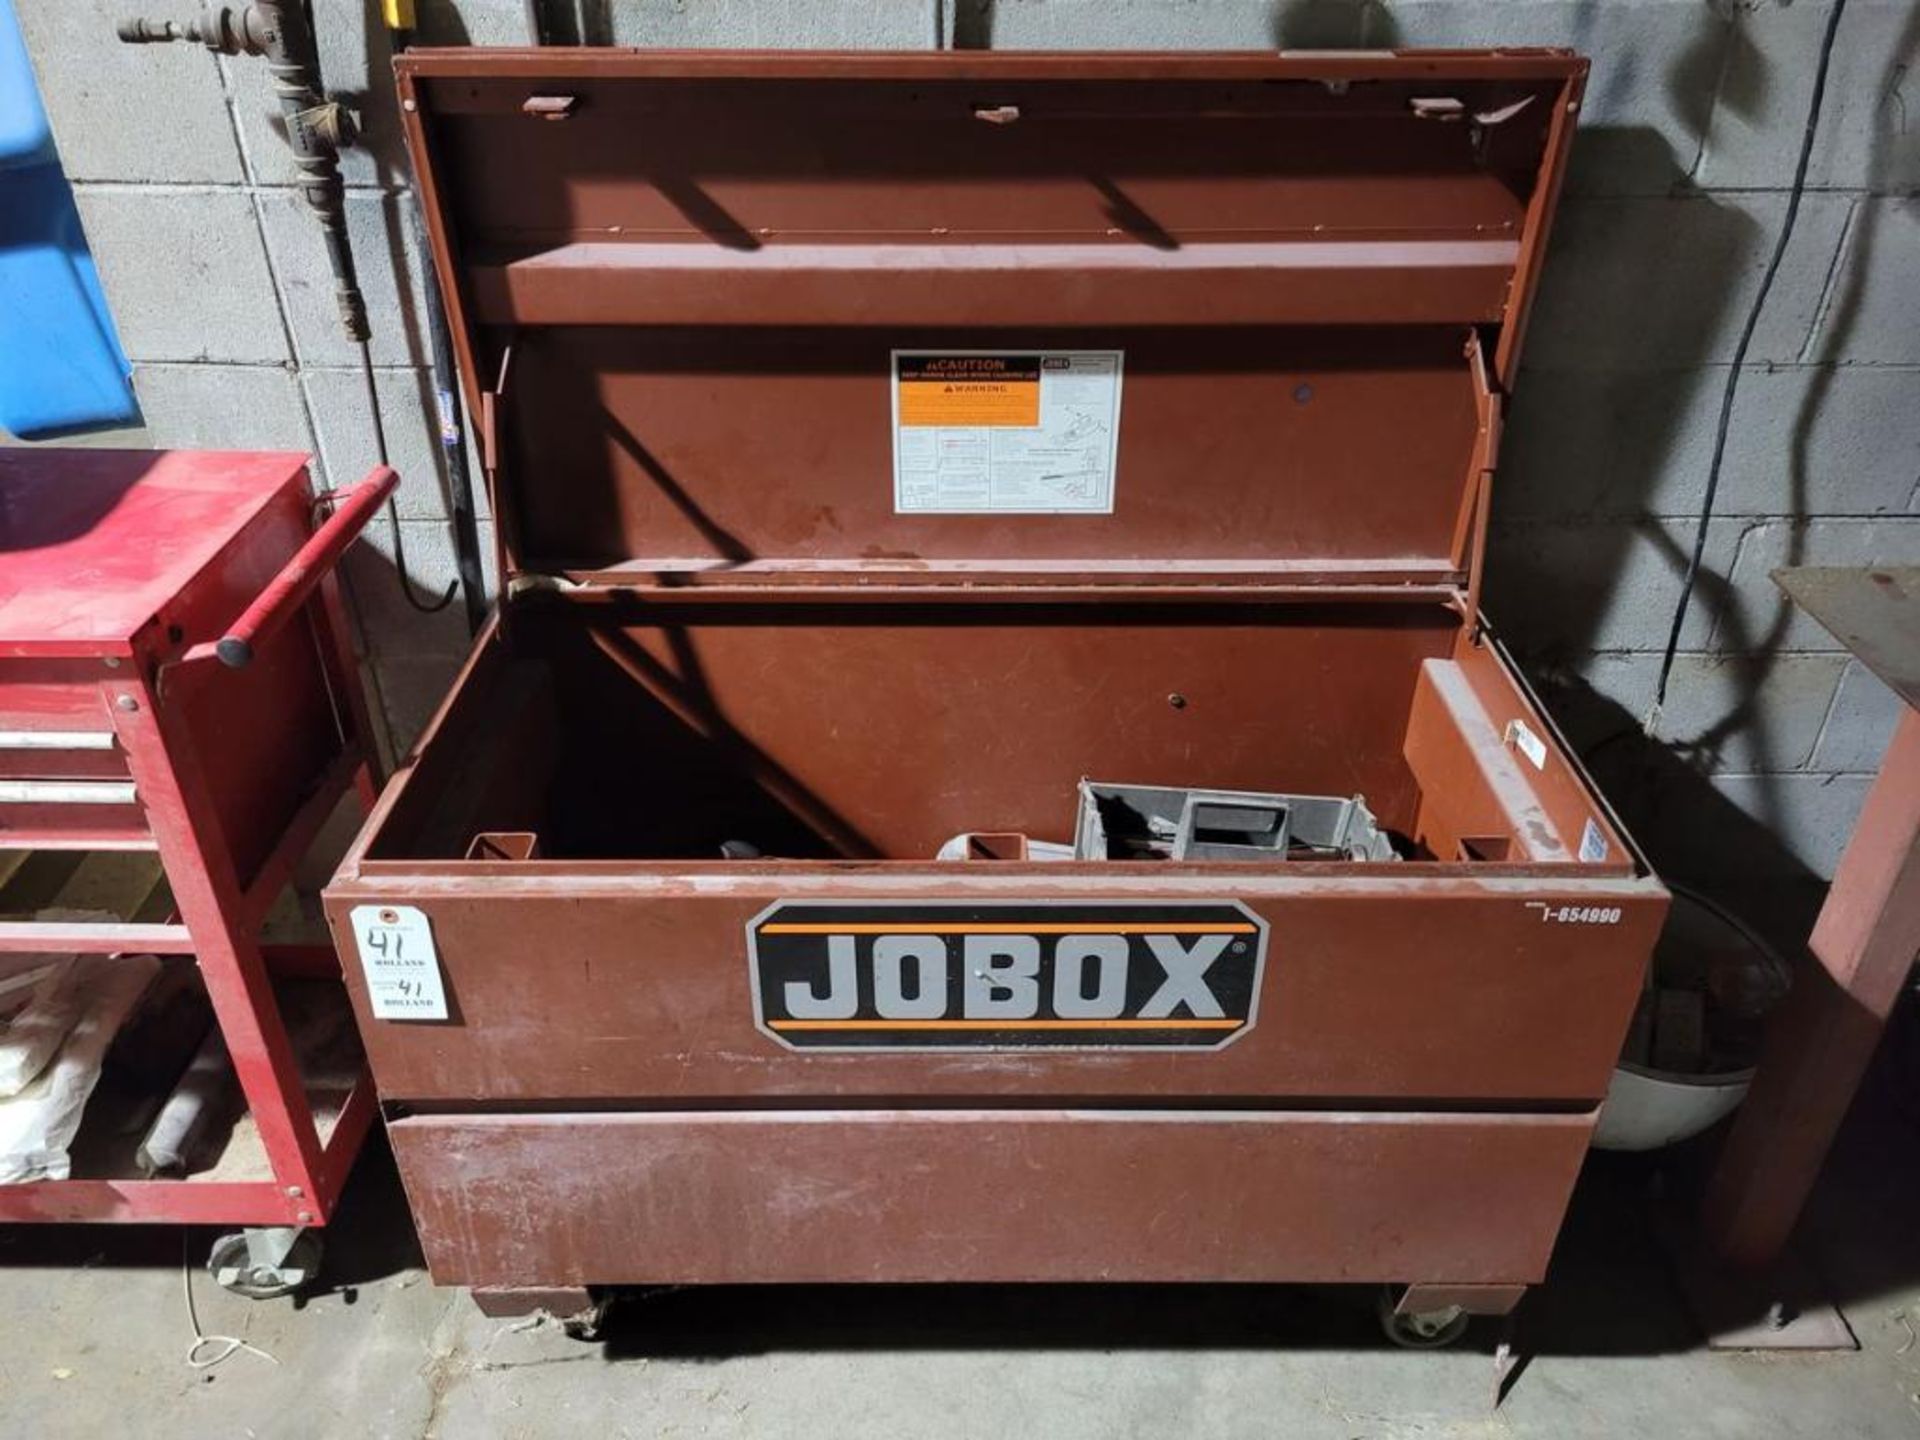 Jobox Model 1-644990 Rolling Tool Chest - Image 2 of 3